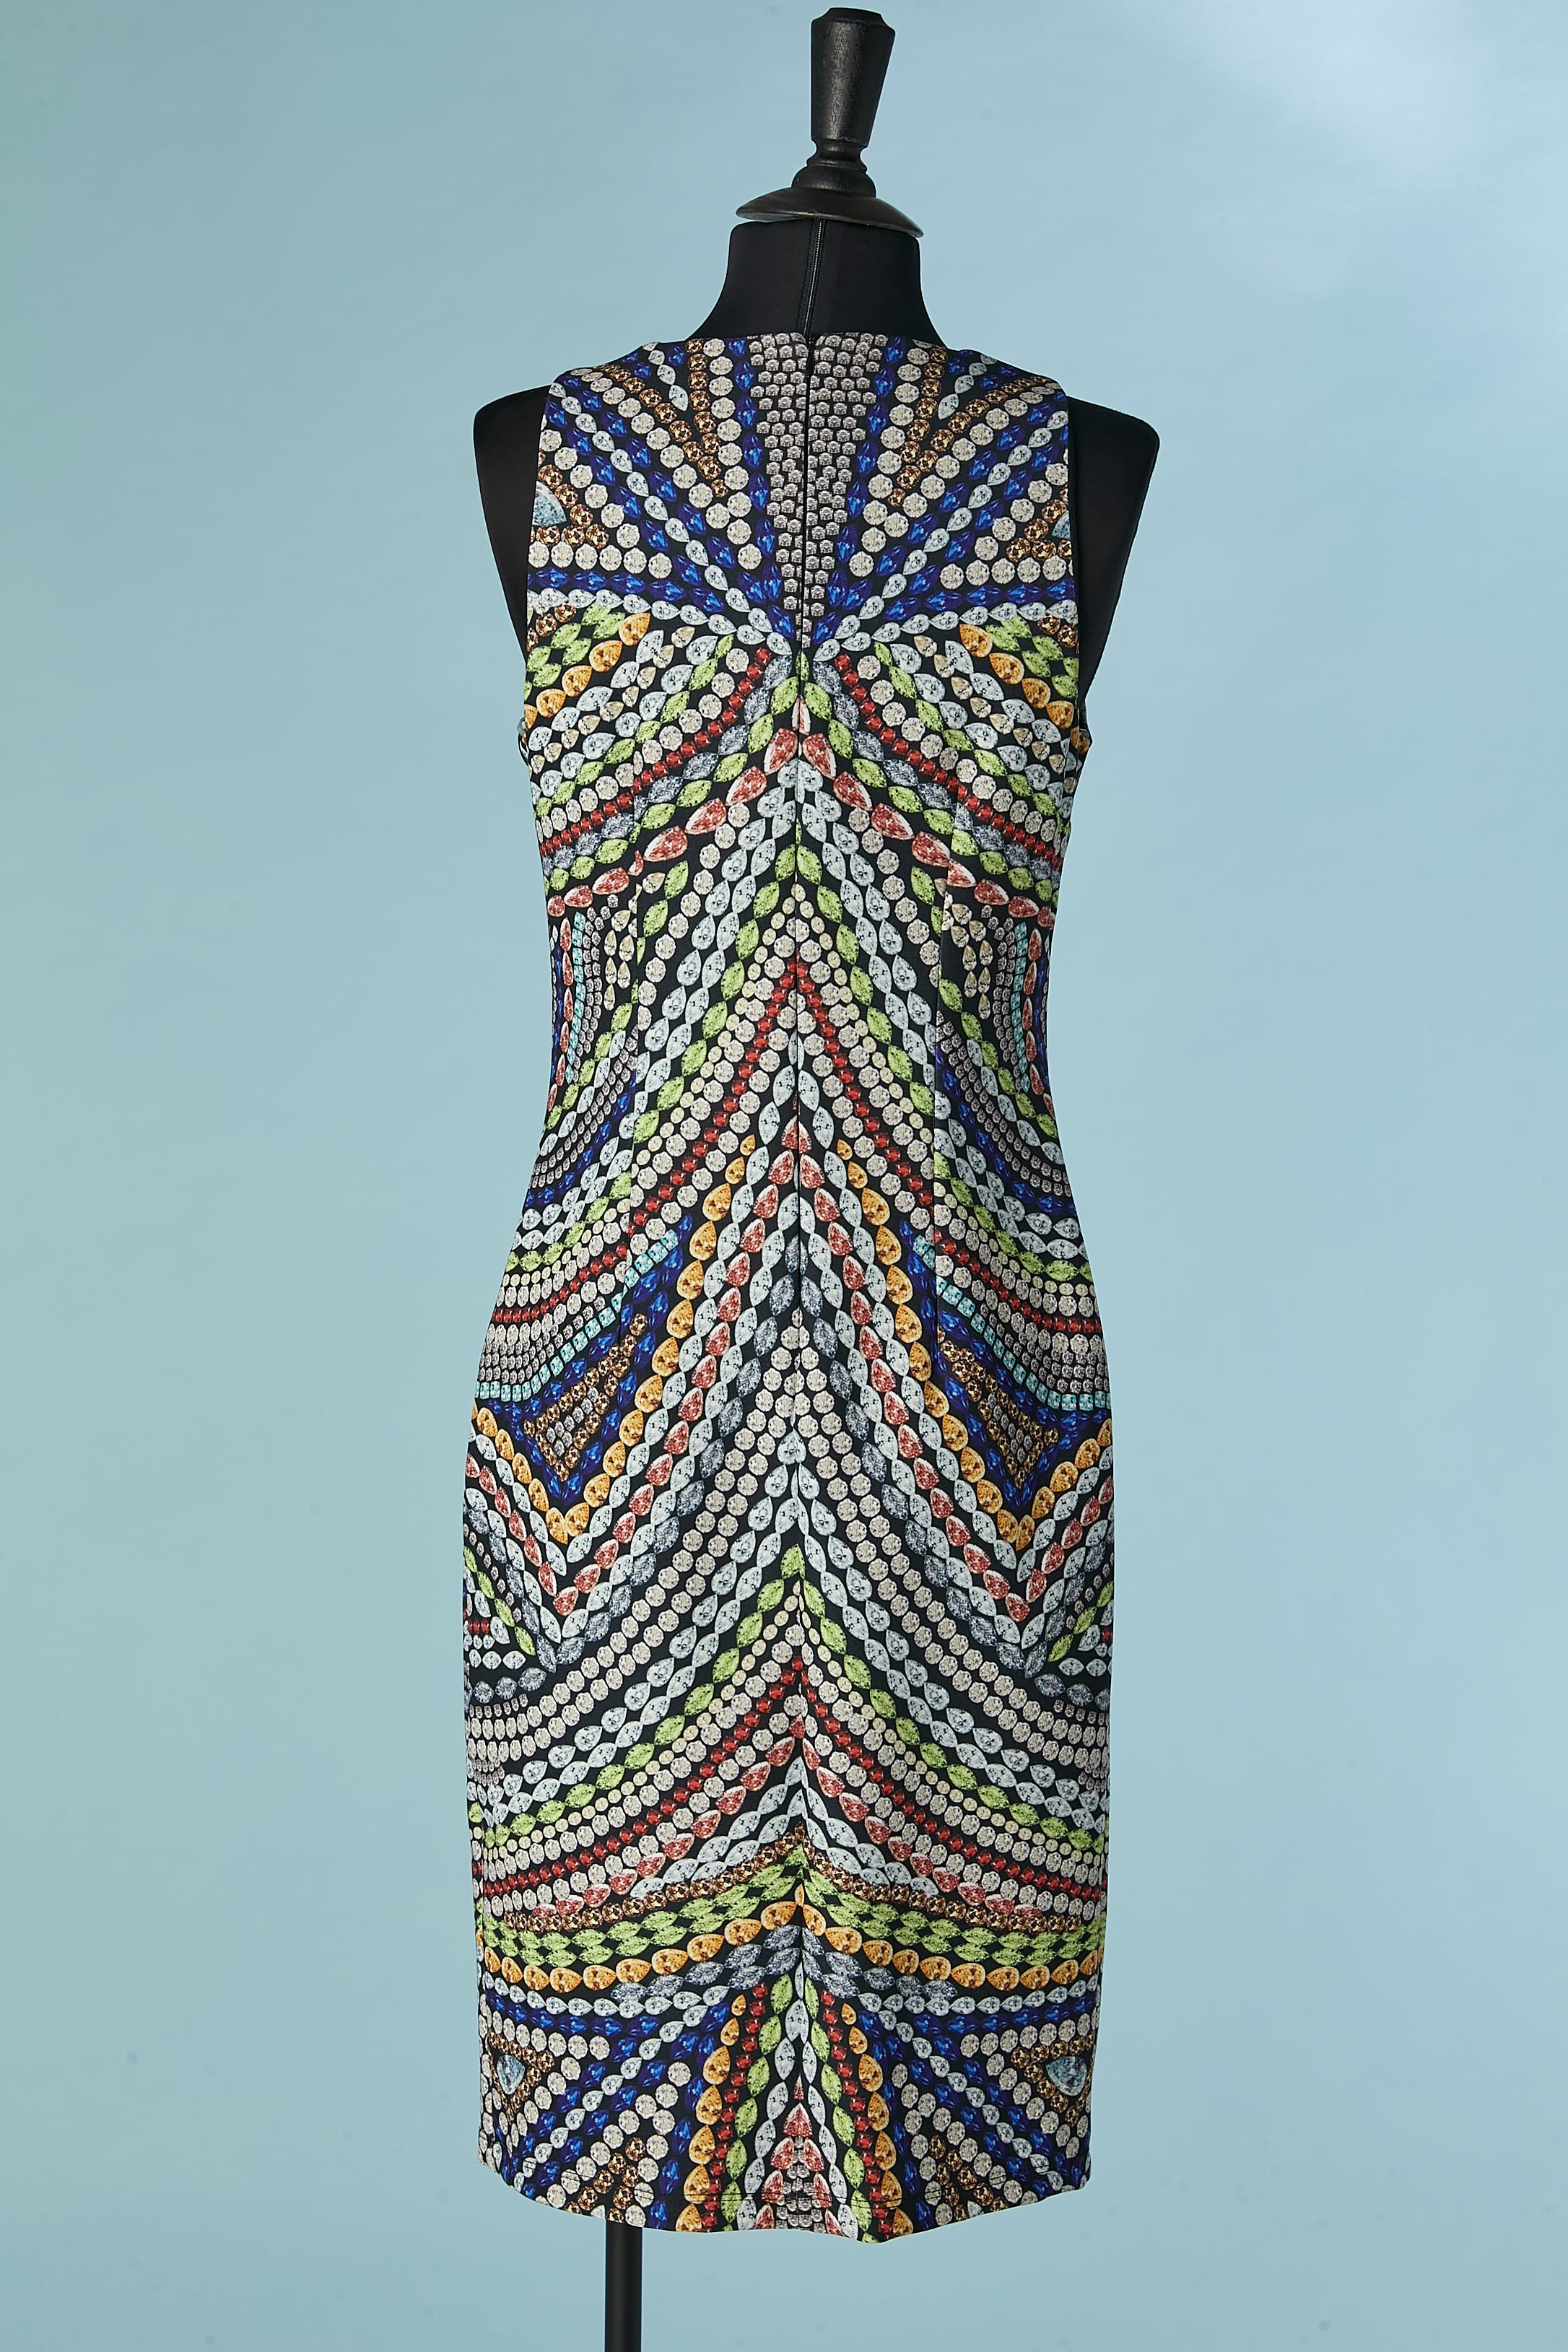 Sleeveless printed cocktail dress with rhinestone embellishement Gai Mattiolo  For Sale 2